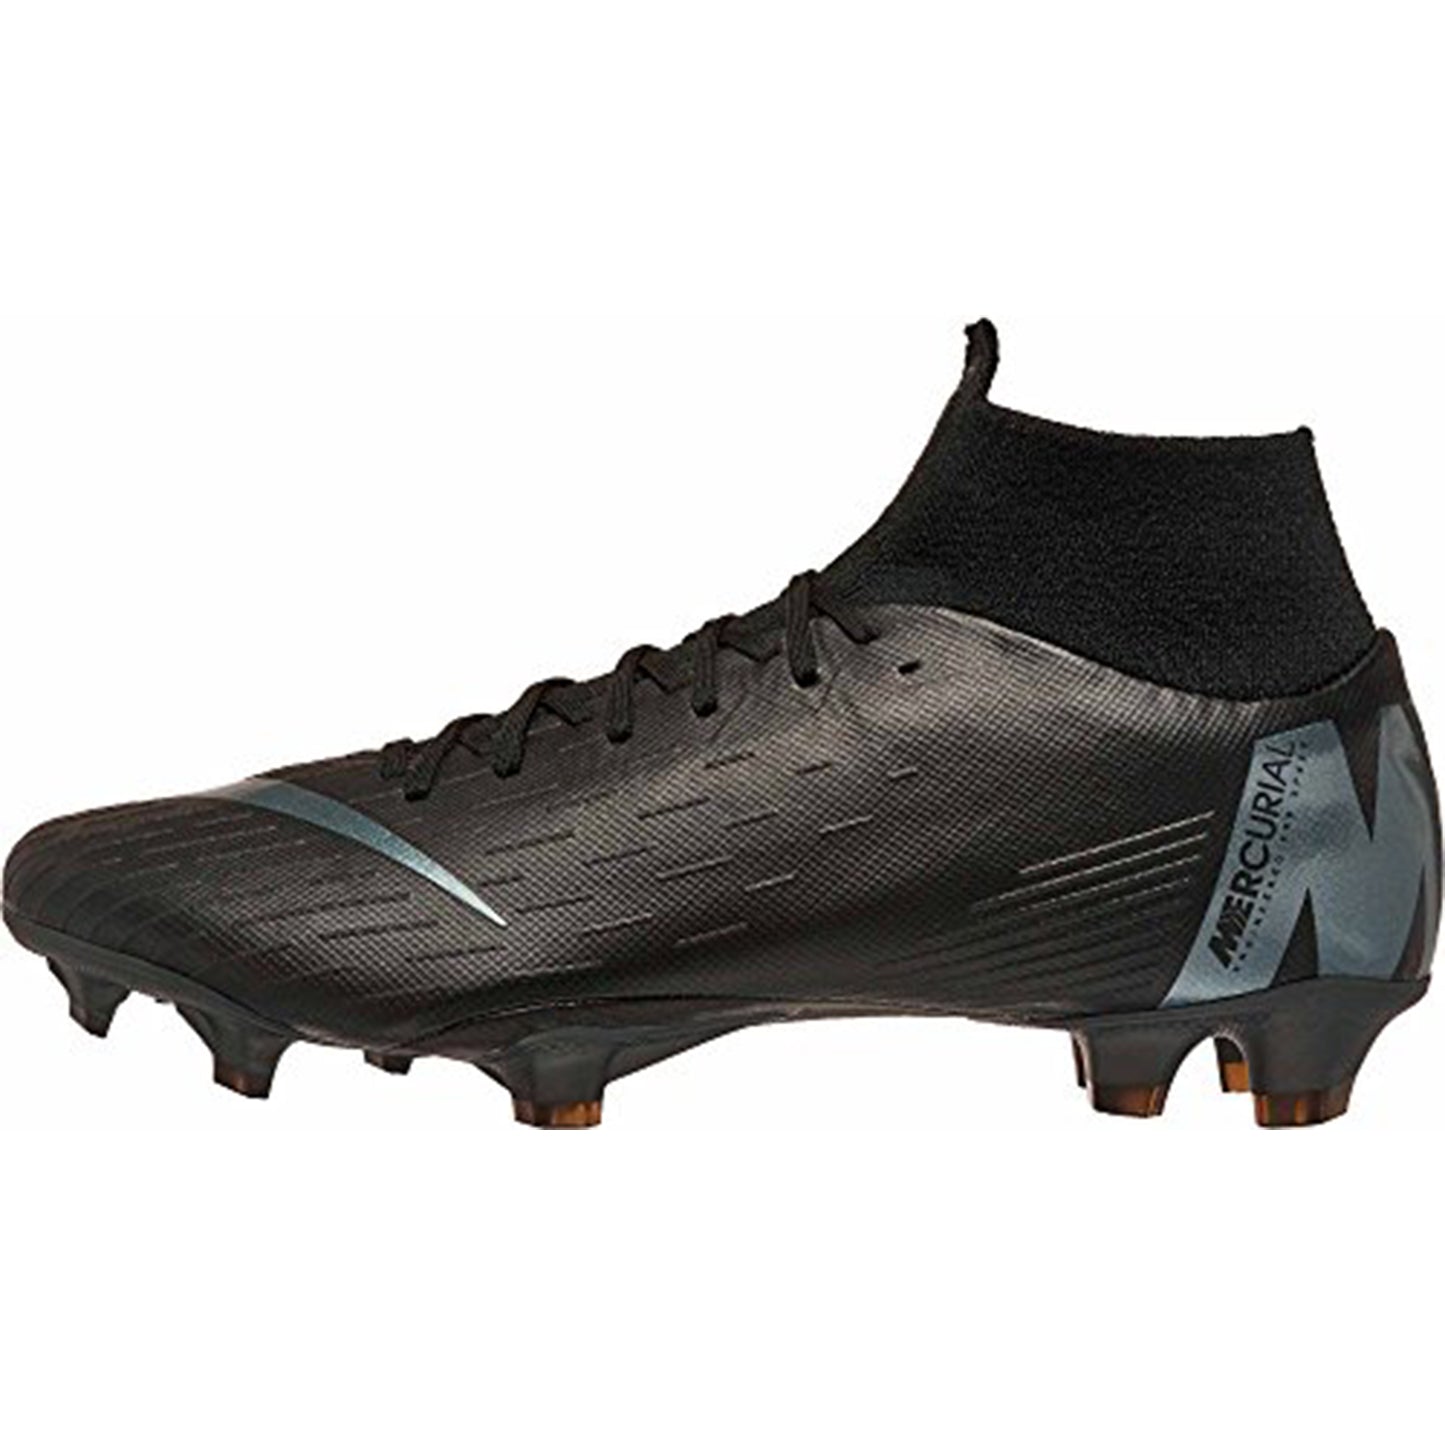 Nike Mercurial Superfly 6 Pro FG Soccer Cleat Size 12 - Men AH7368-001 Black